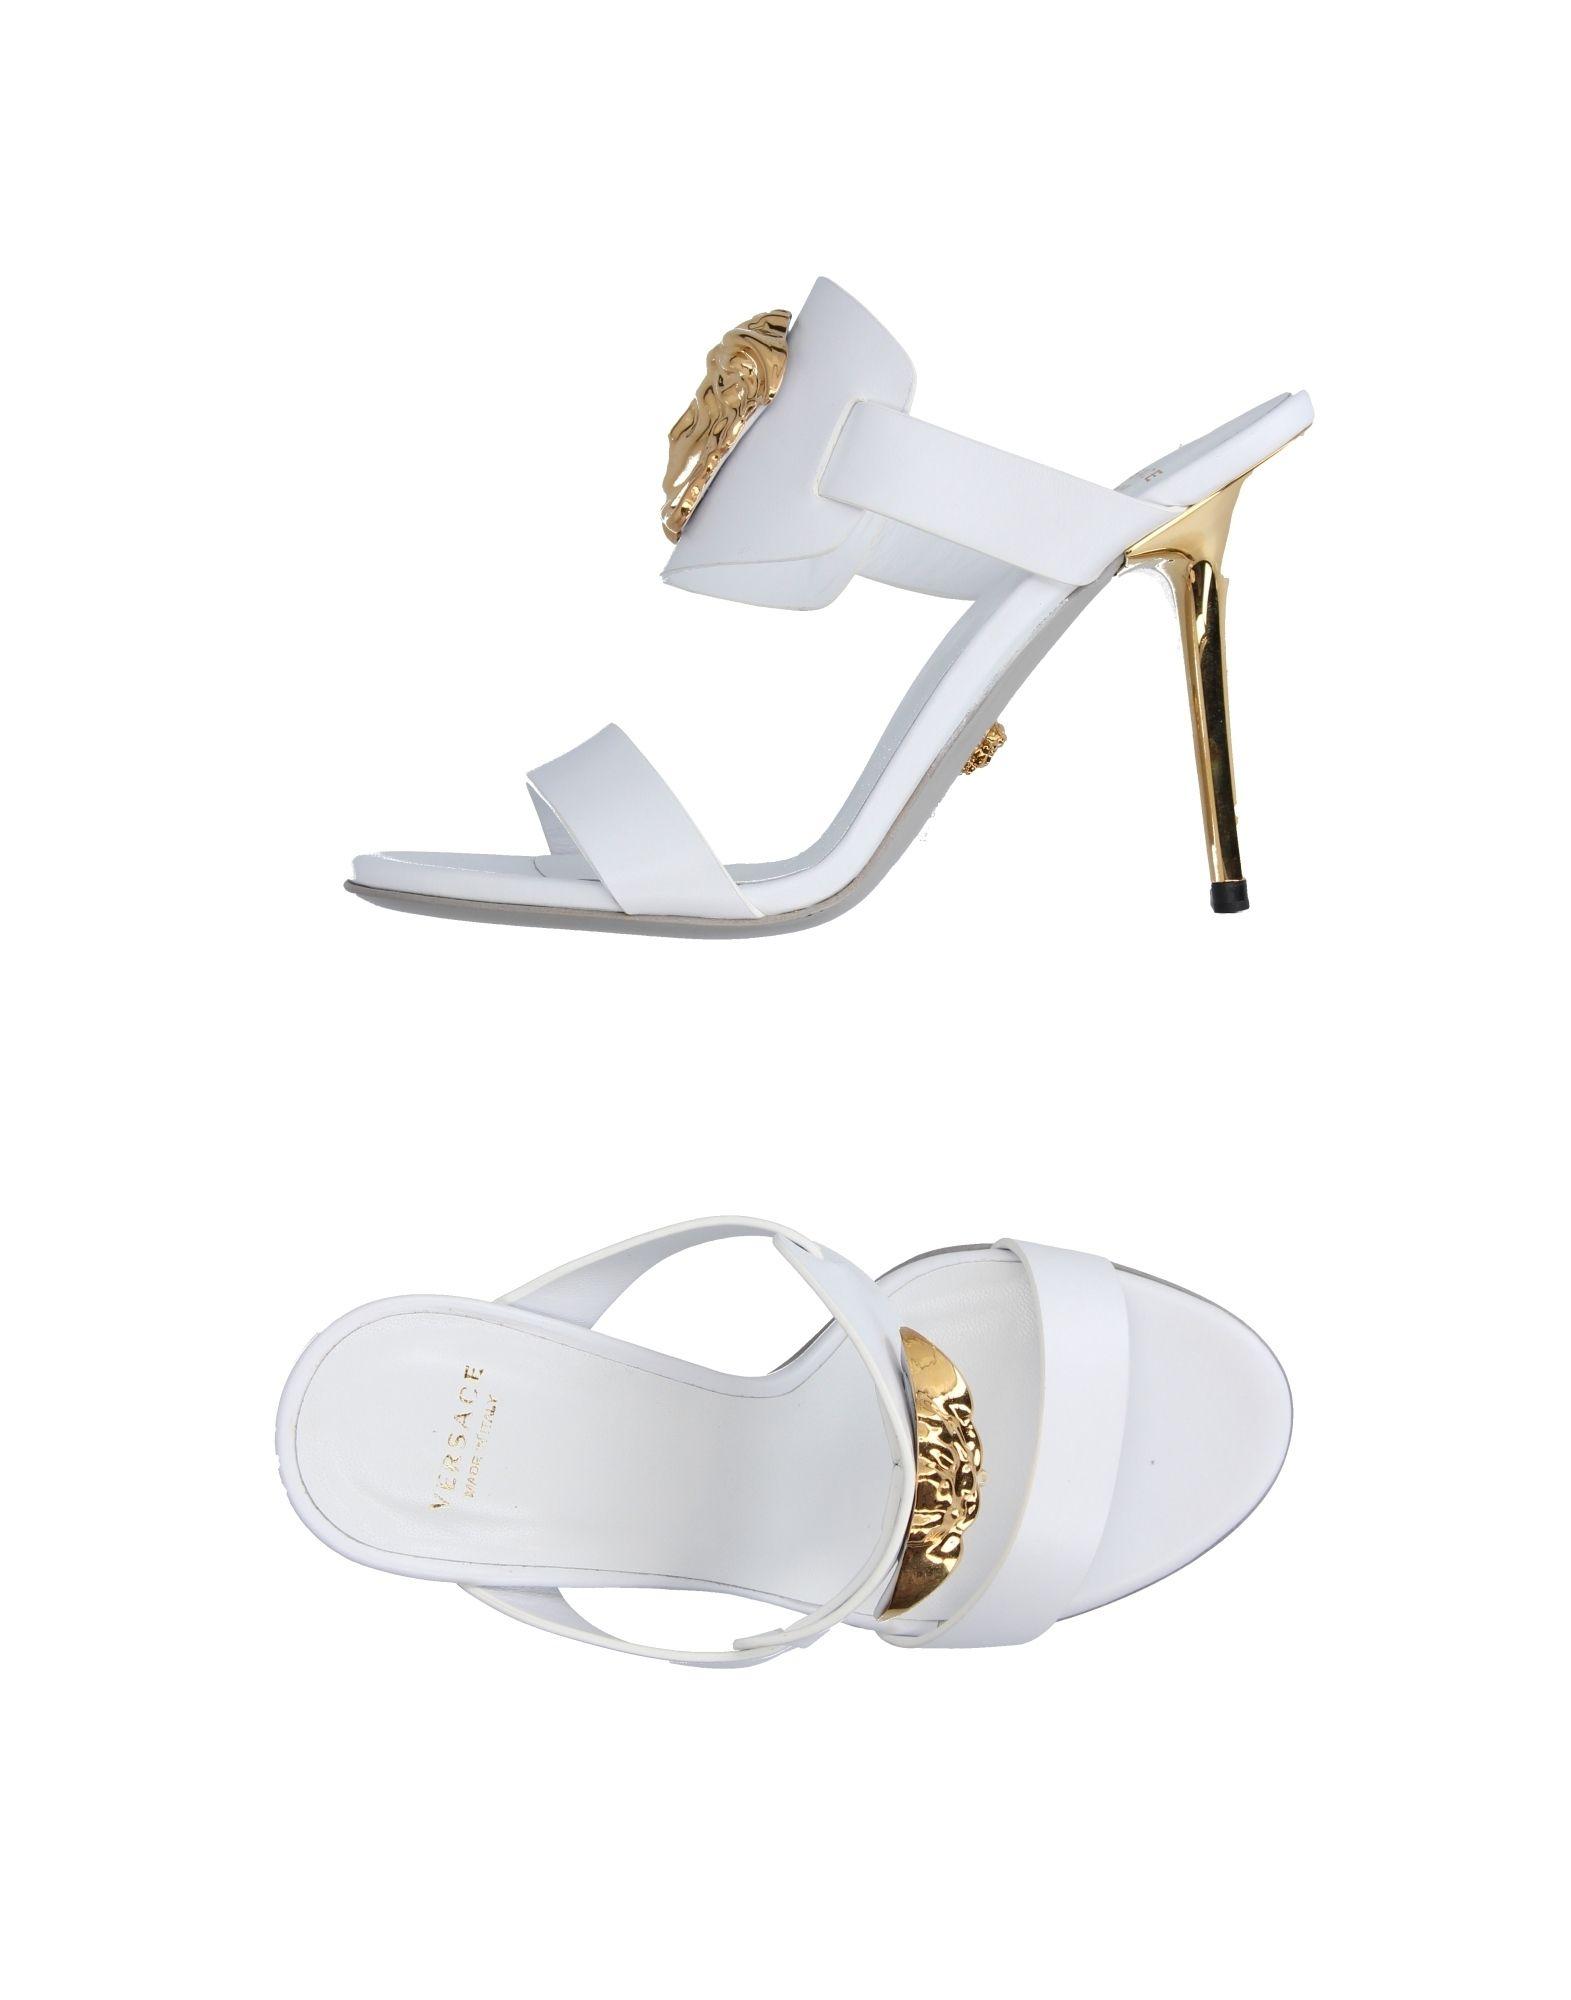 Lyst - Versace Sandals in White